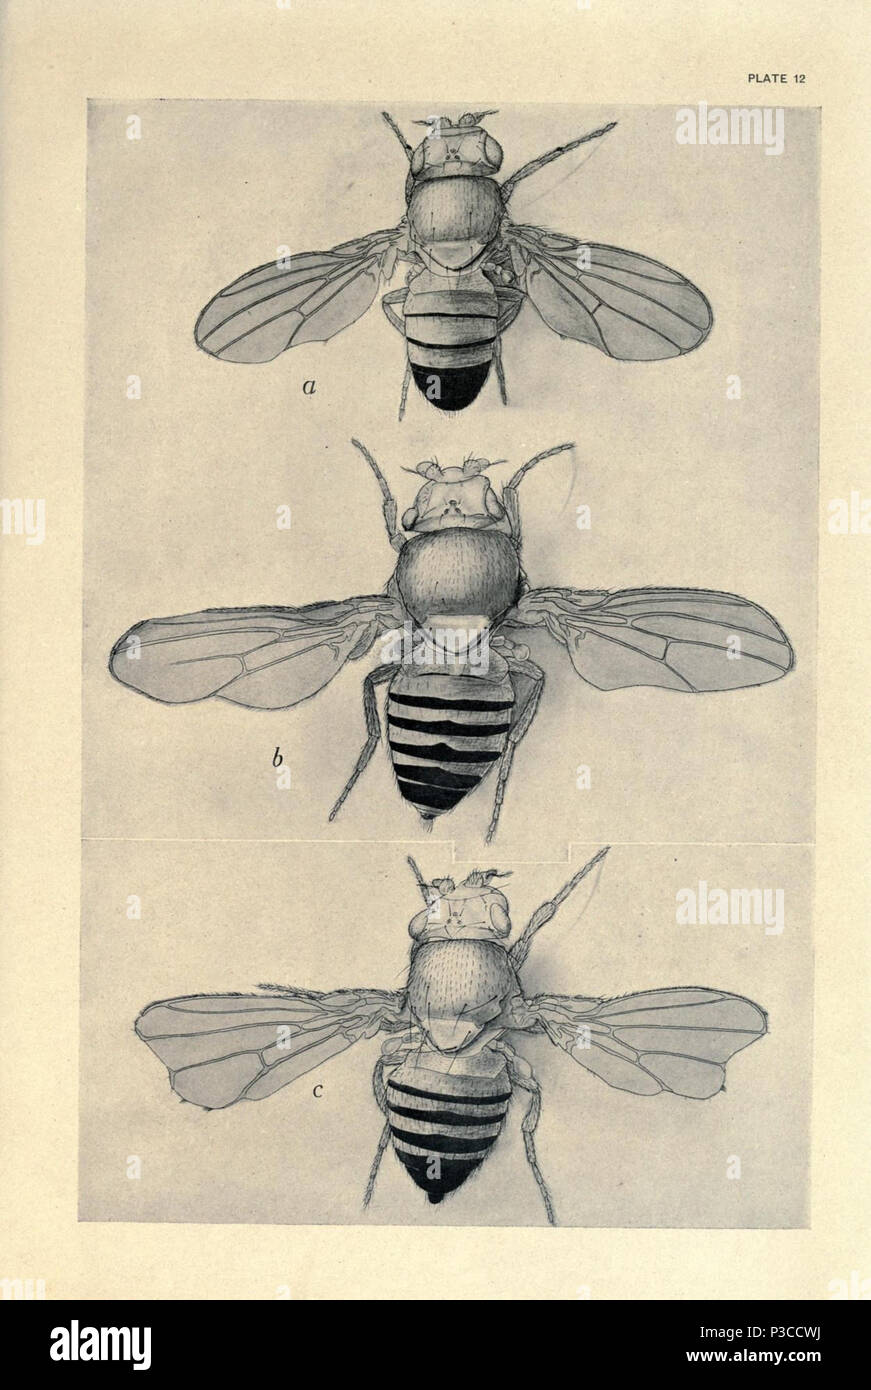 Contributions to the genetics of Drosophila melanogaster ... Washington,Carnegie Institution of Washington,1919. http://biodiversitylibrary.org/page/805718 2 Contributions to the genetics of Drosophila melanogaster (1919) - Plate 12 - BioDivLibrary page 805718 Stock Photo